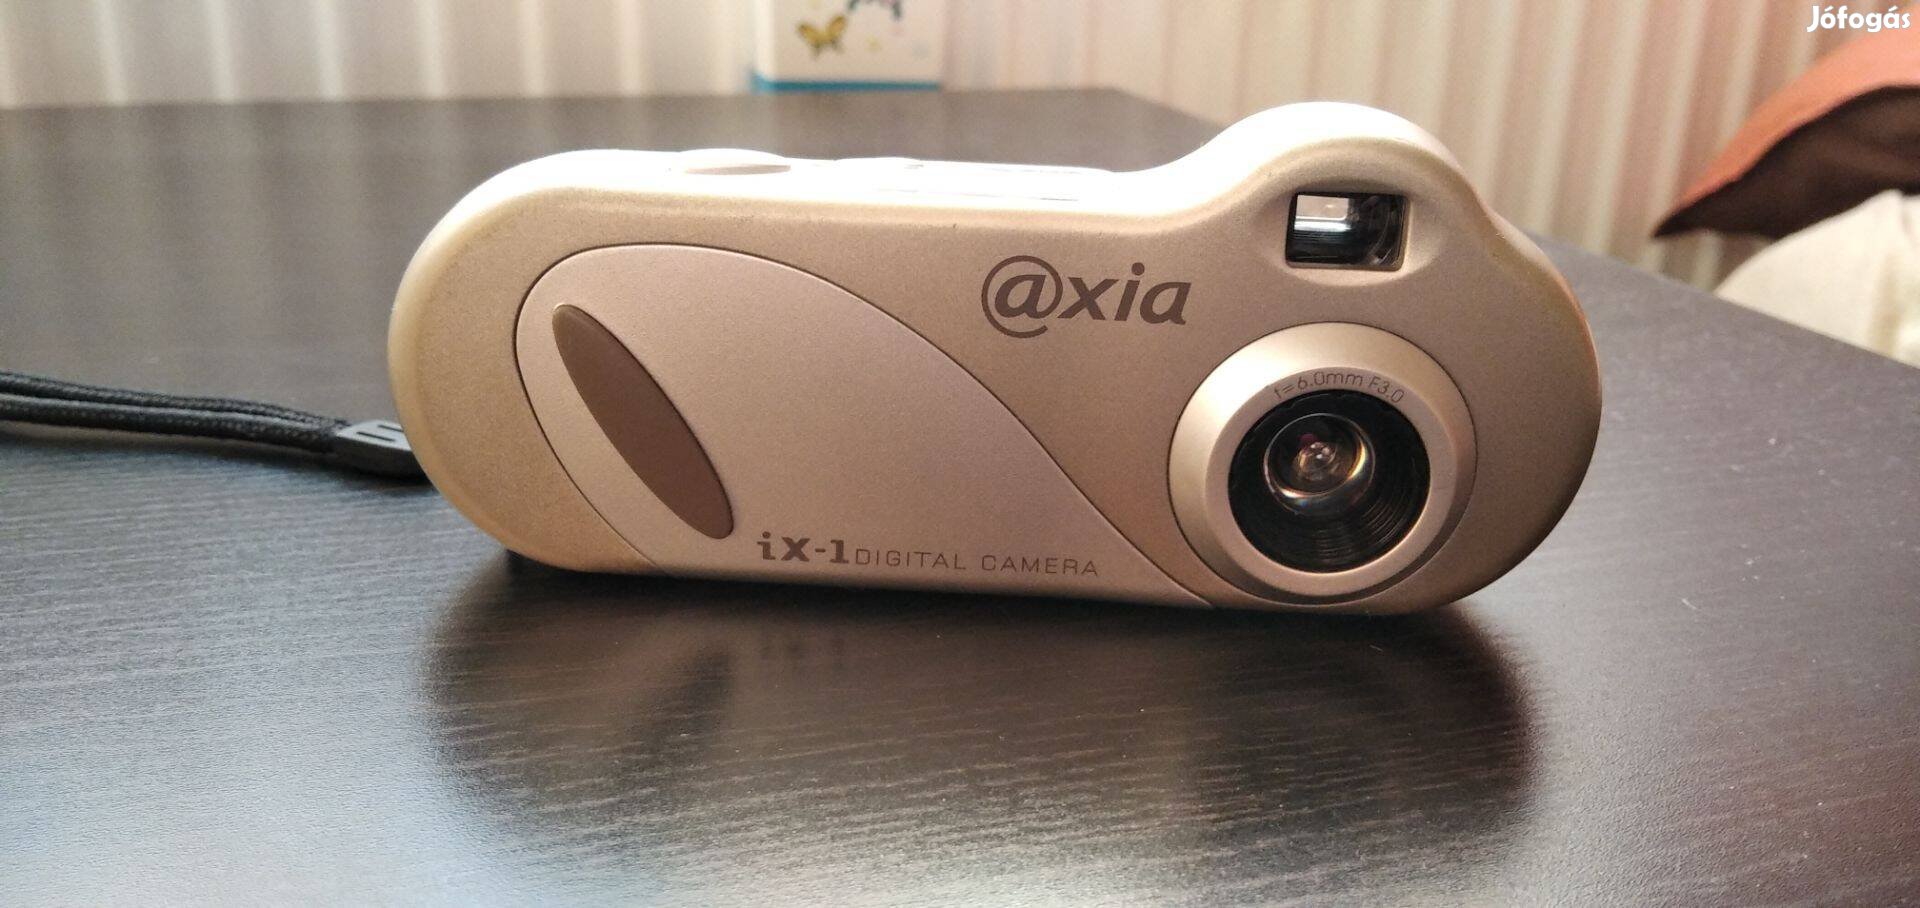 Fujifilm Axia iX-1